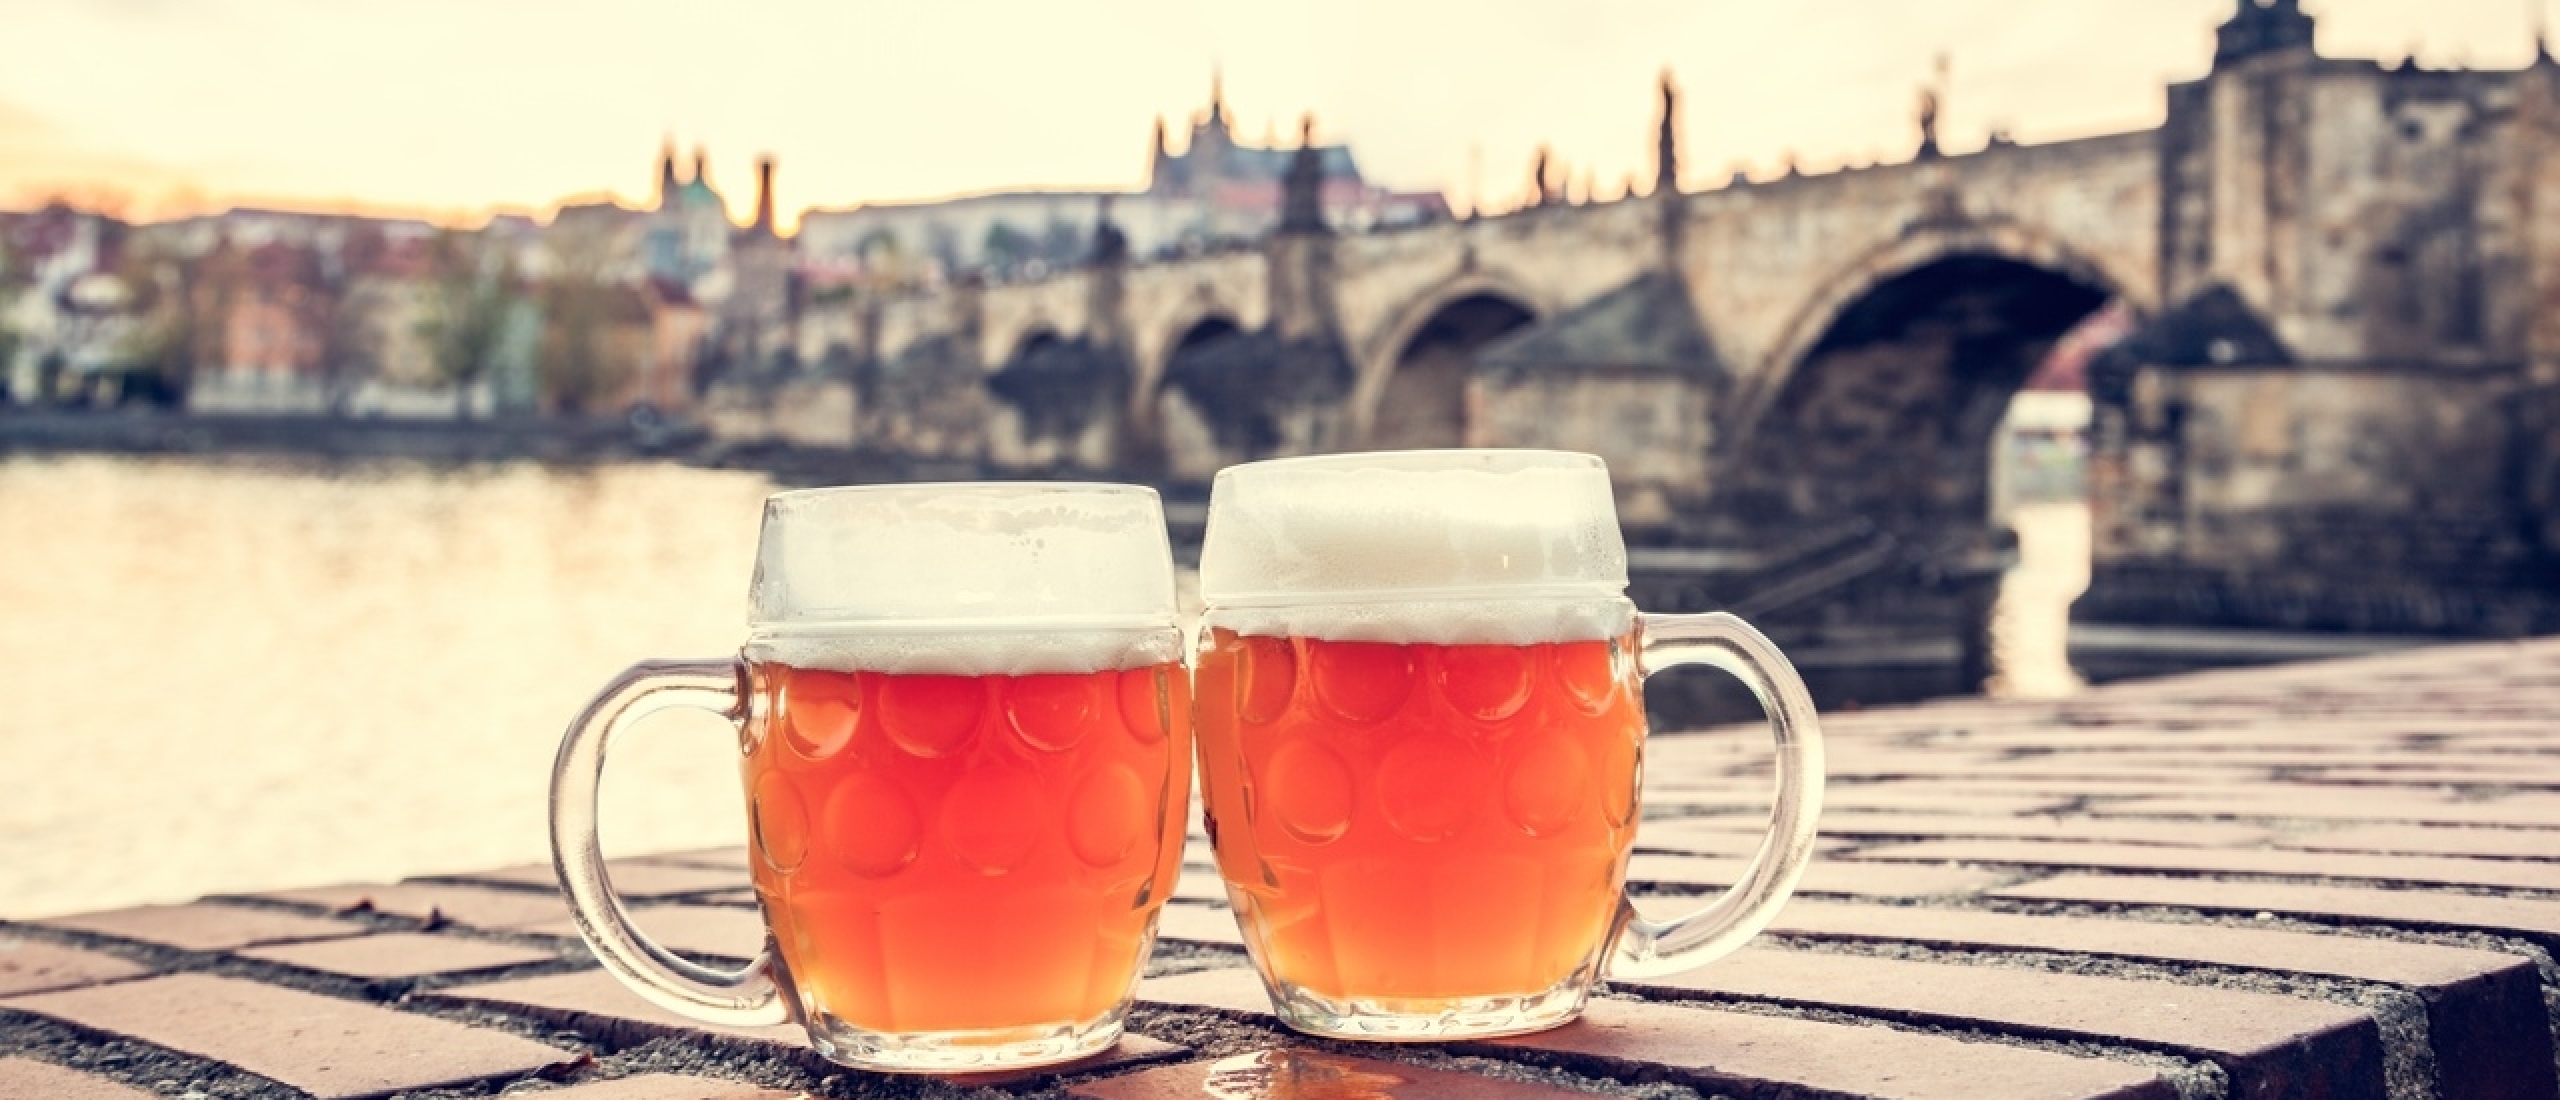 Pilsner Urquell: The Original Beer Experience